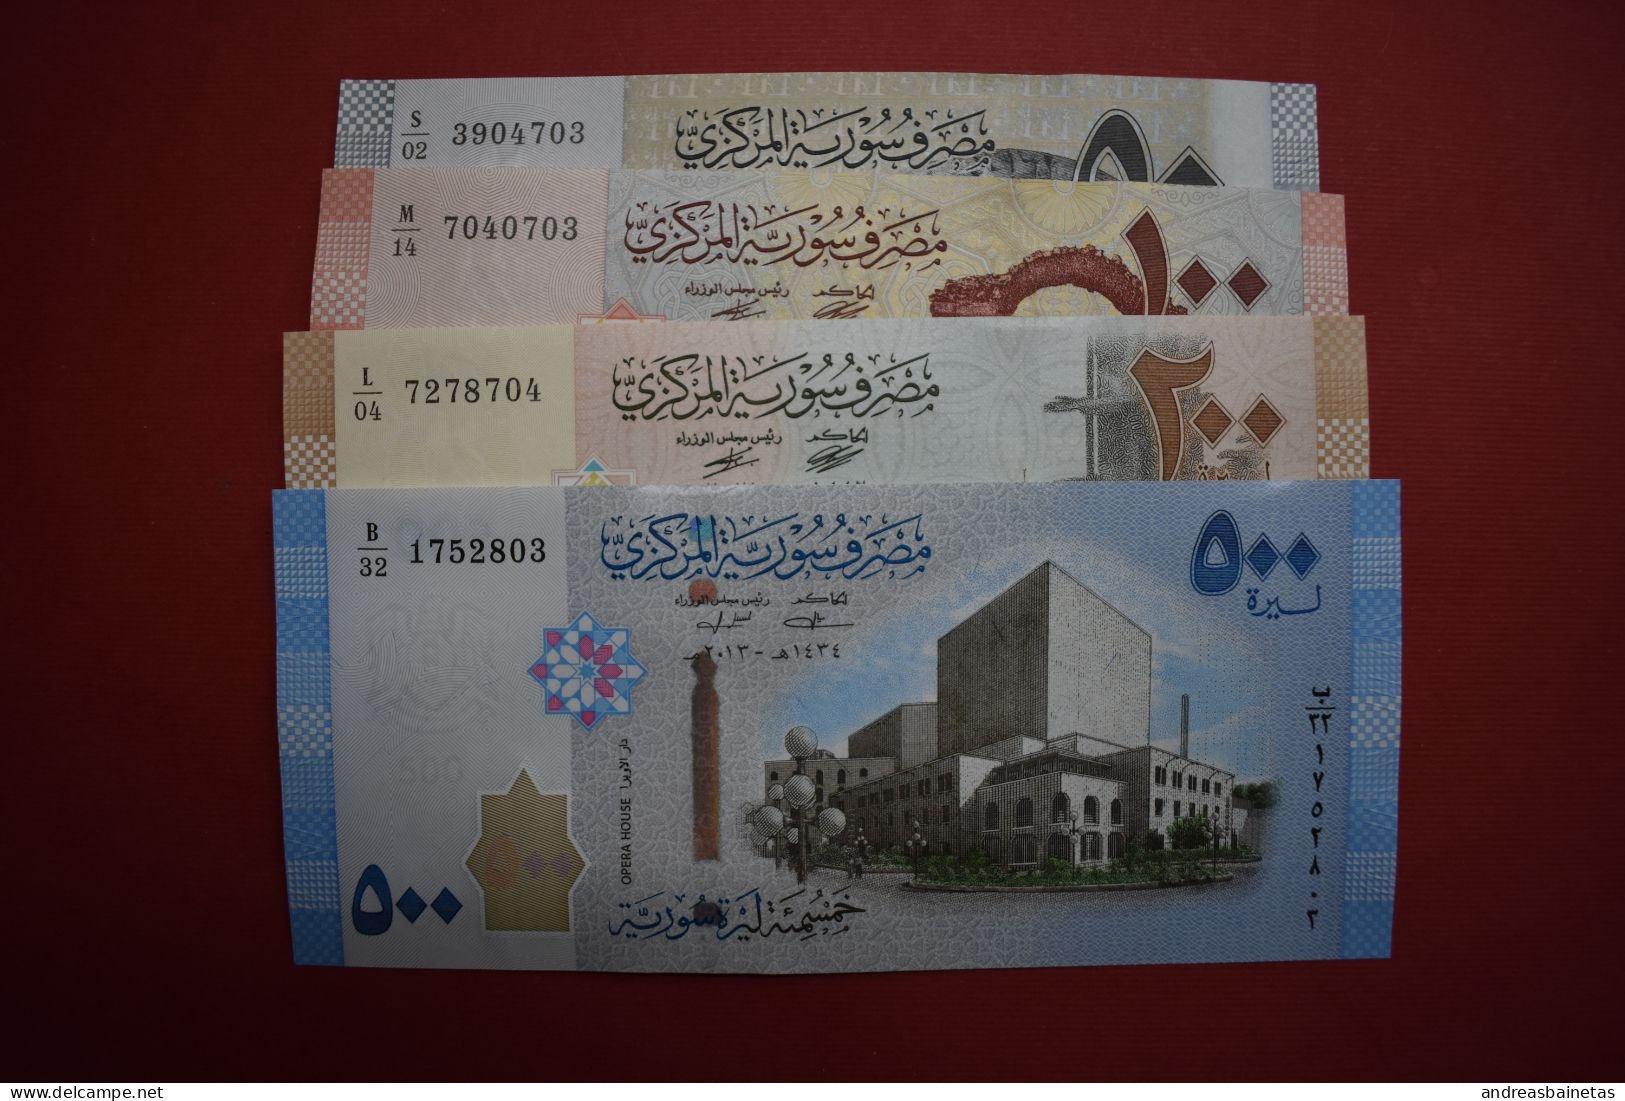 Banknotes  Syria 500 200 100 50 Pounds  UNC - Syrië